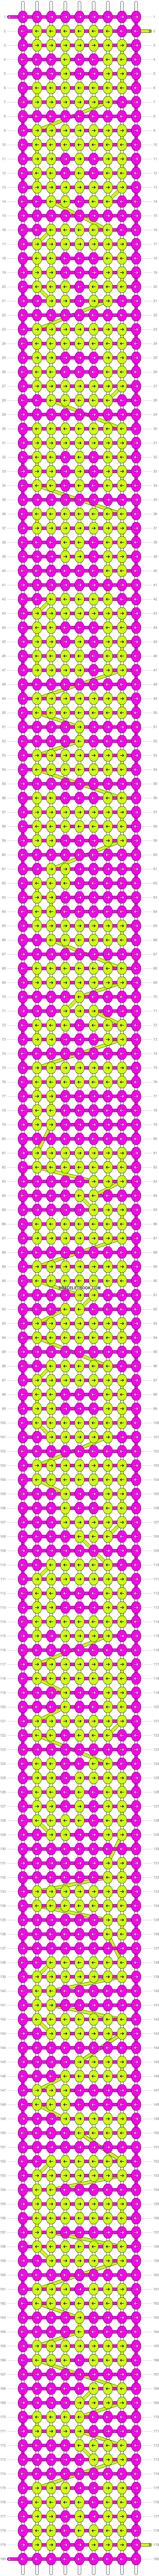 Alpha pattern #47975 variation #130354 pattern